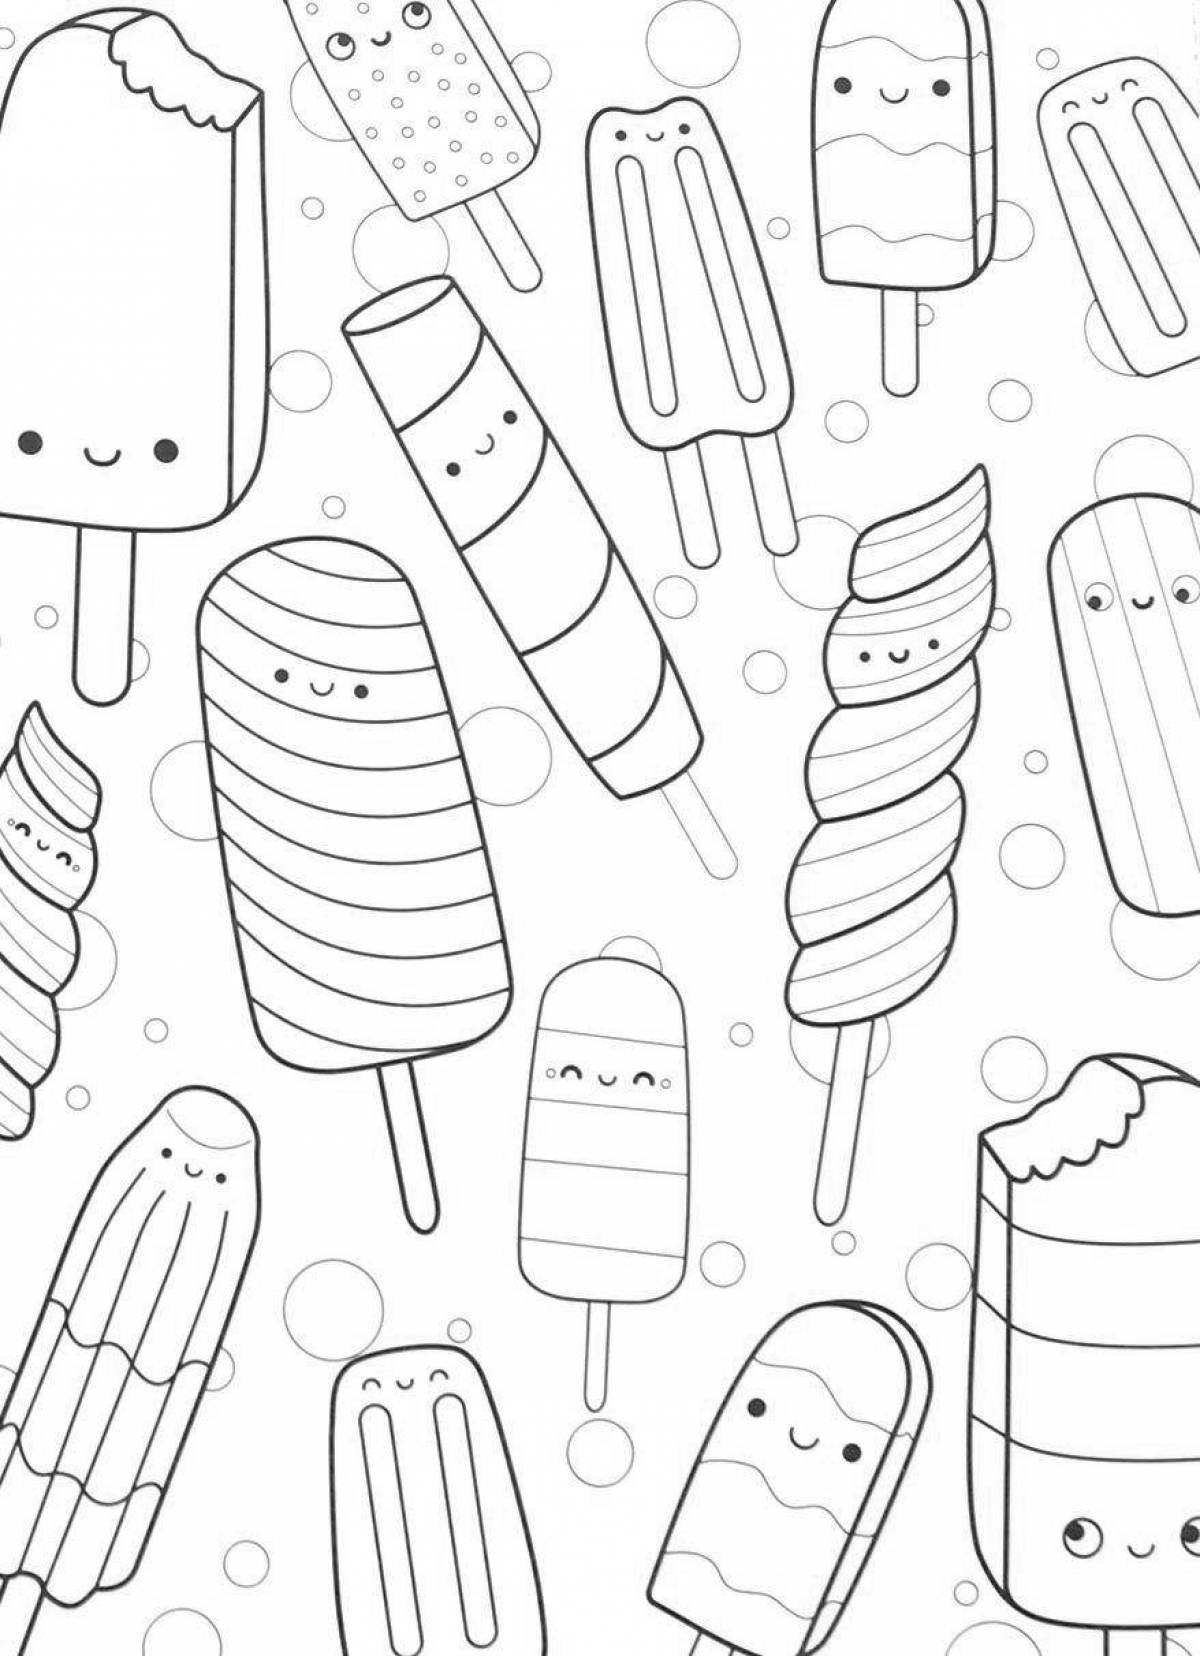 Sunny kawaii food coloring page